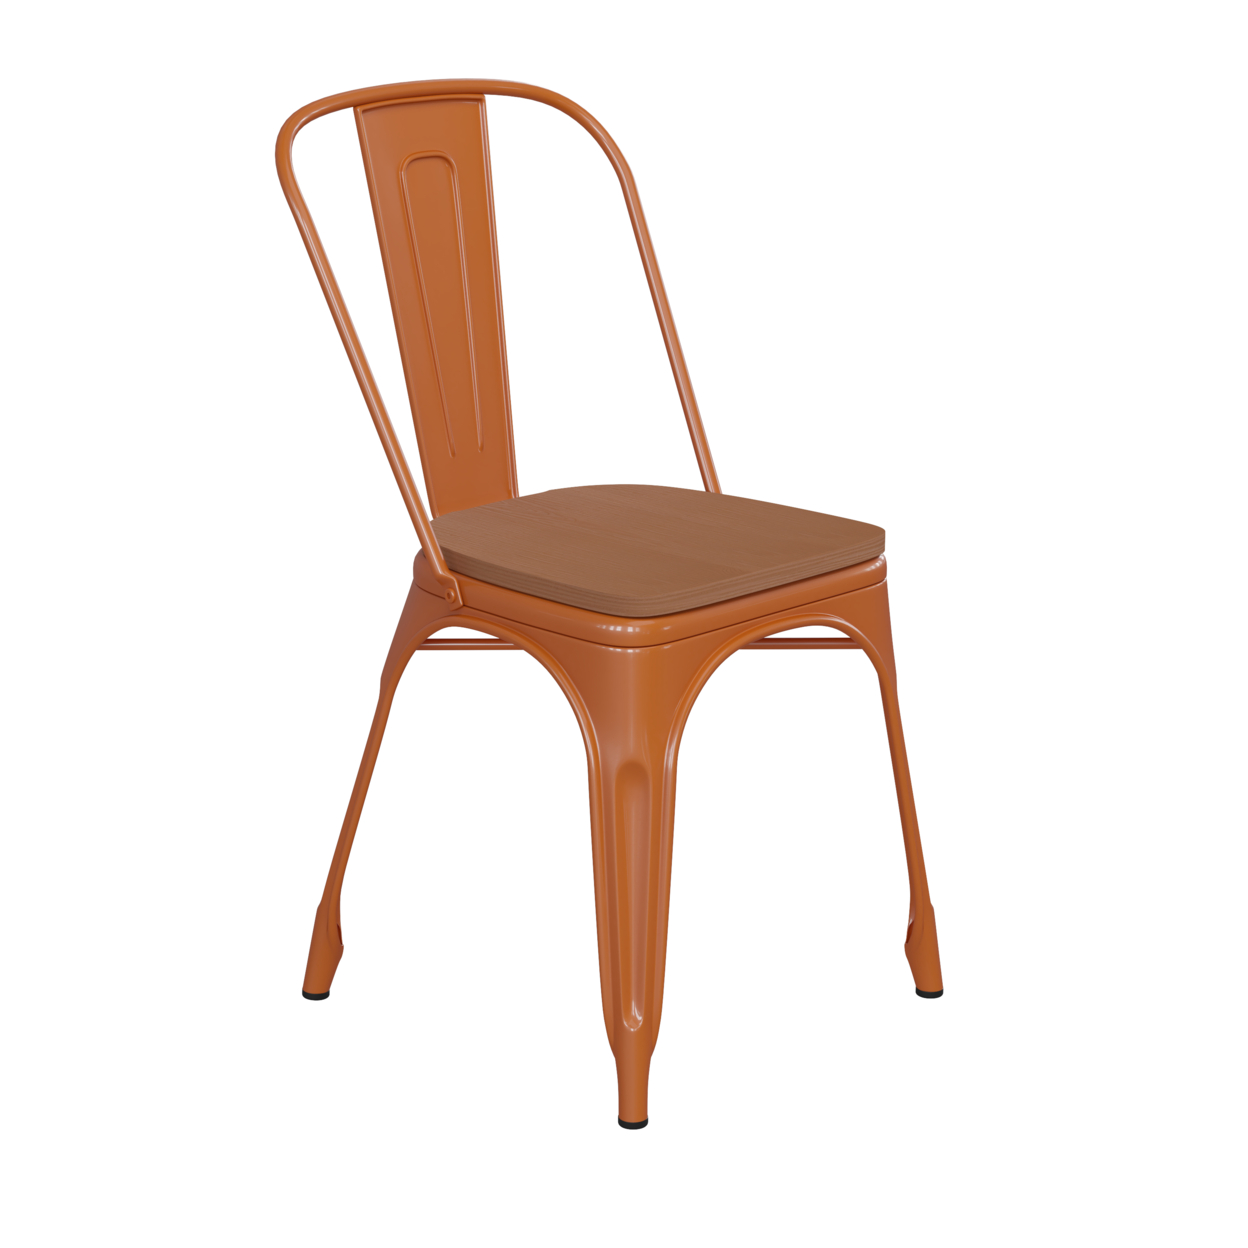 Metal Chair, Curved Design Back, Polyresin Sleek Seat, Rust Orange